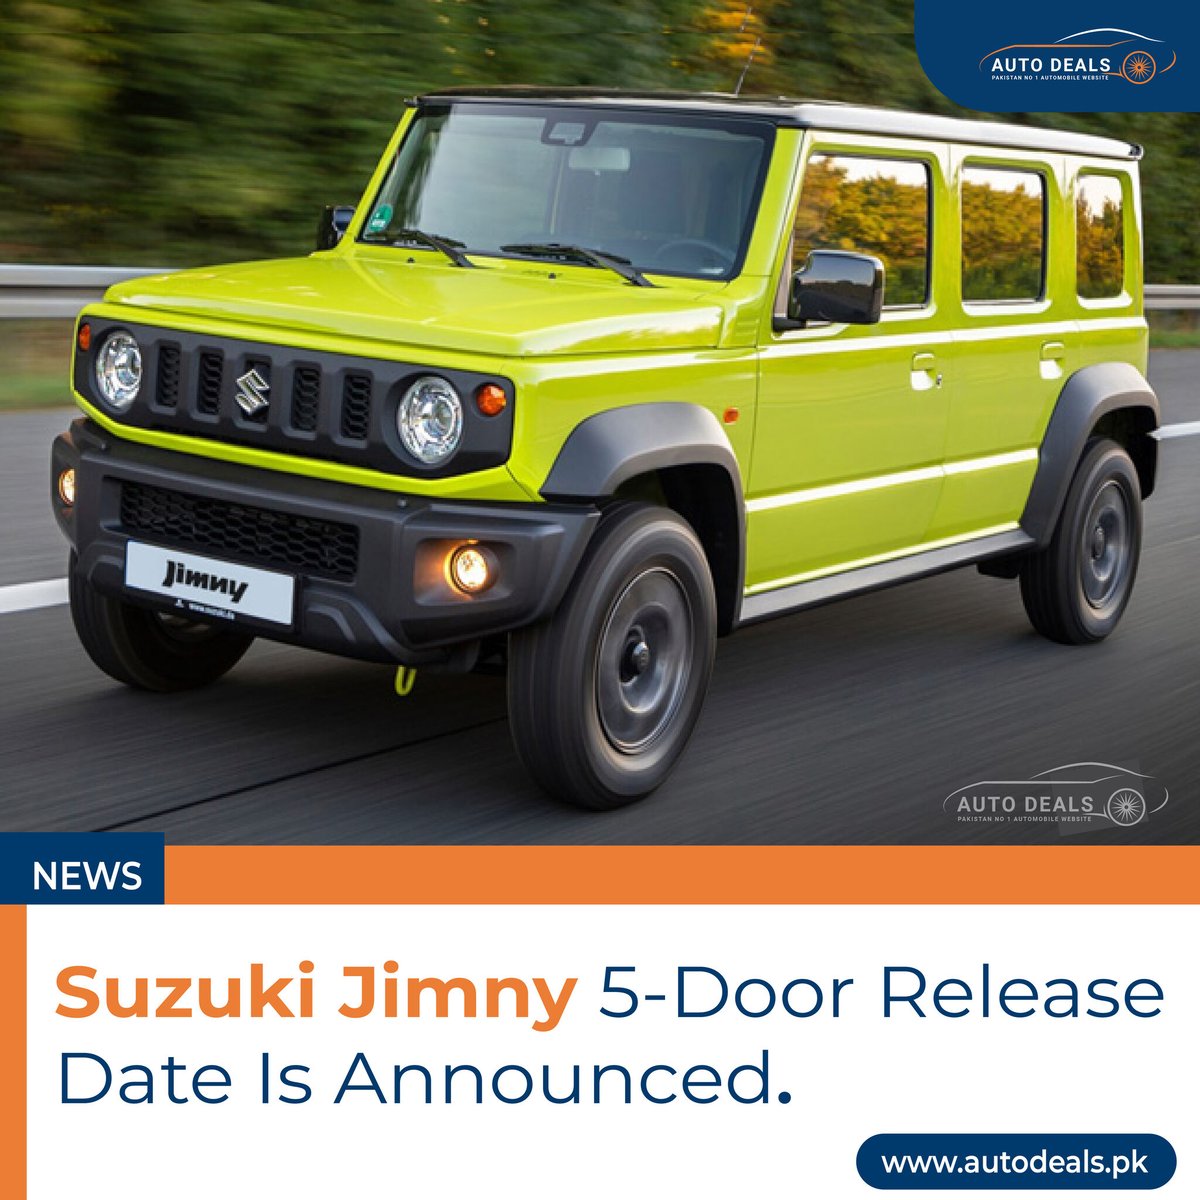 Suzuki Jimny 5-Door Release Date Is Announced.
Visit Our Website: autodeals.pk
#Hondacar #carlover #carupdate #safedrive #autodeal